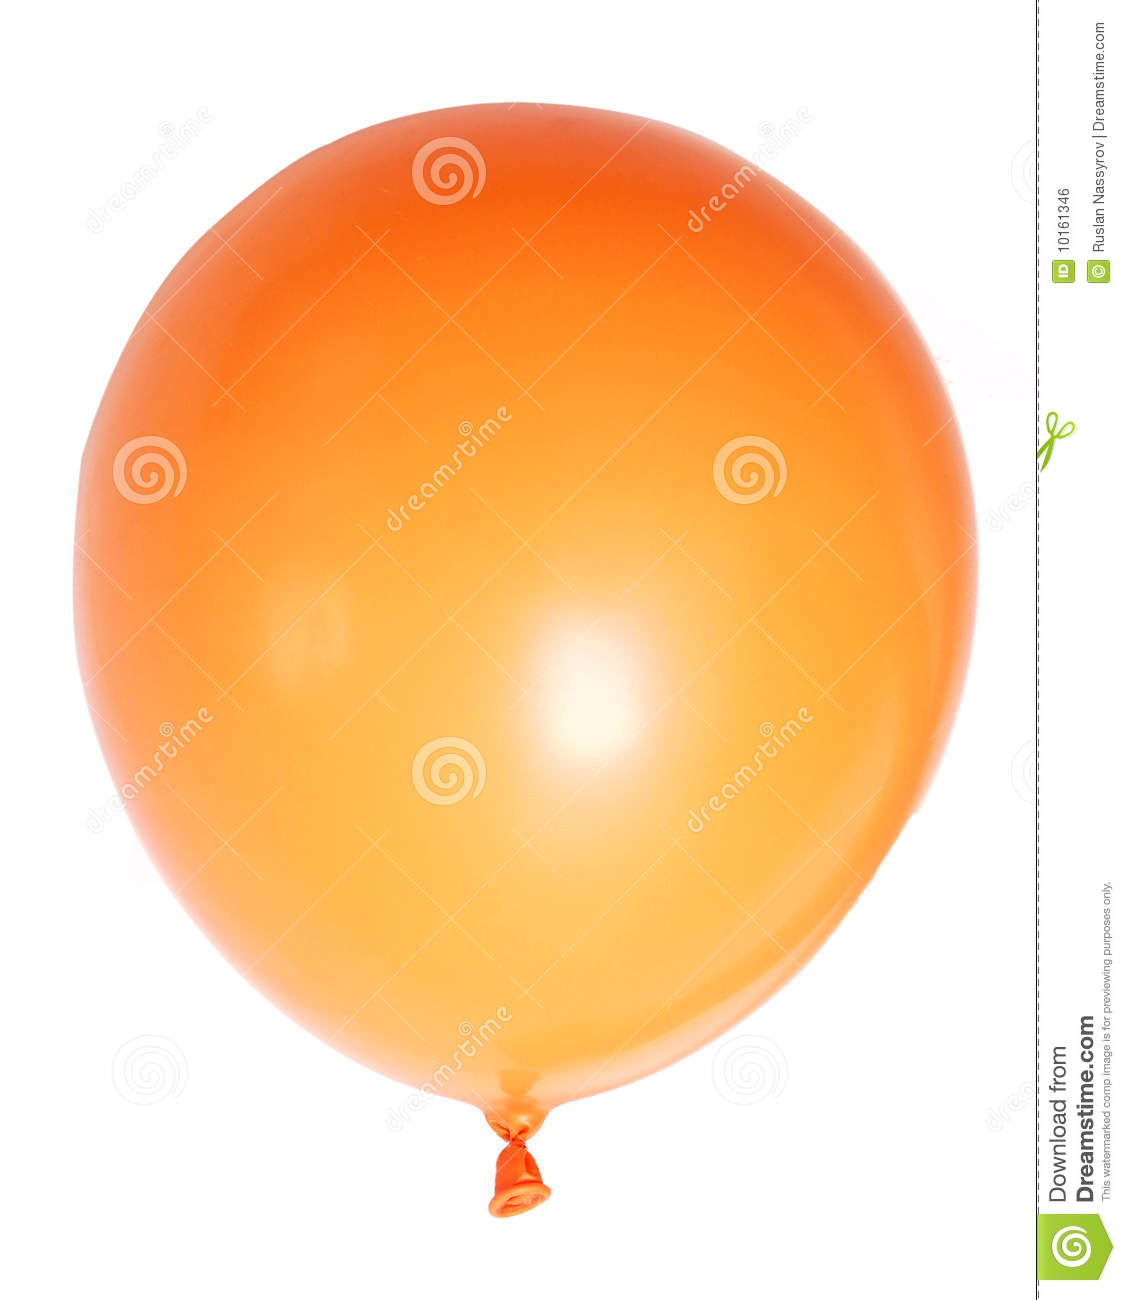 Orange Balloon Royalty Free Stock Image   Image  10161346